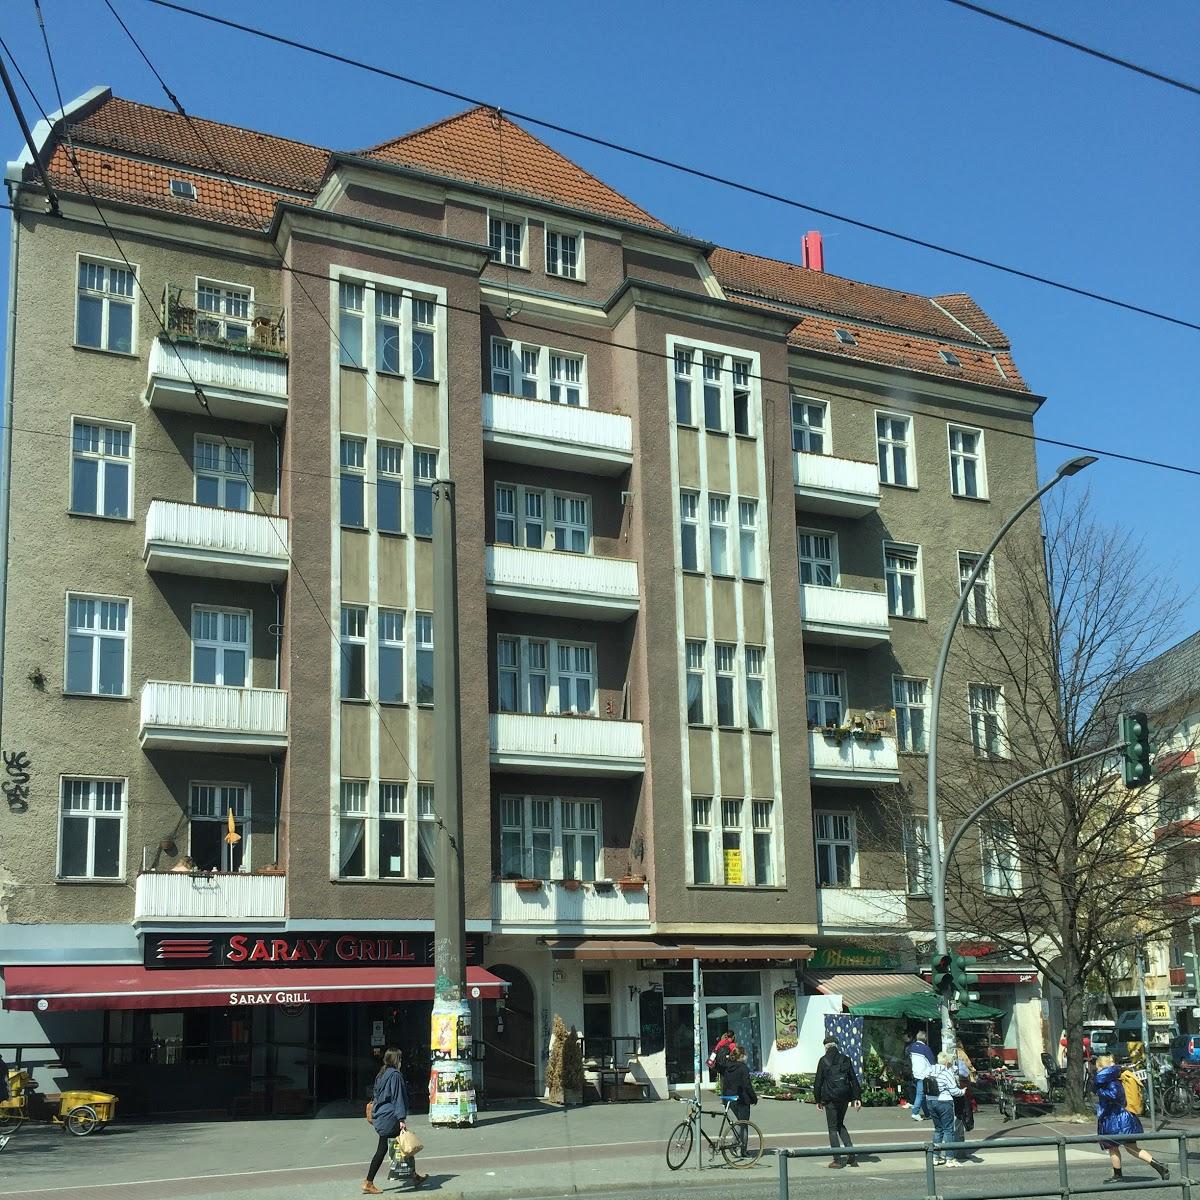 Restaurant "Saray Grill" in Berlin